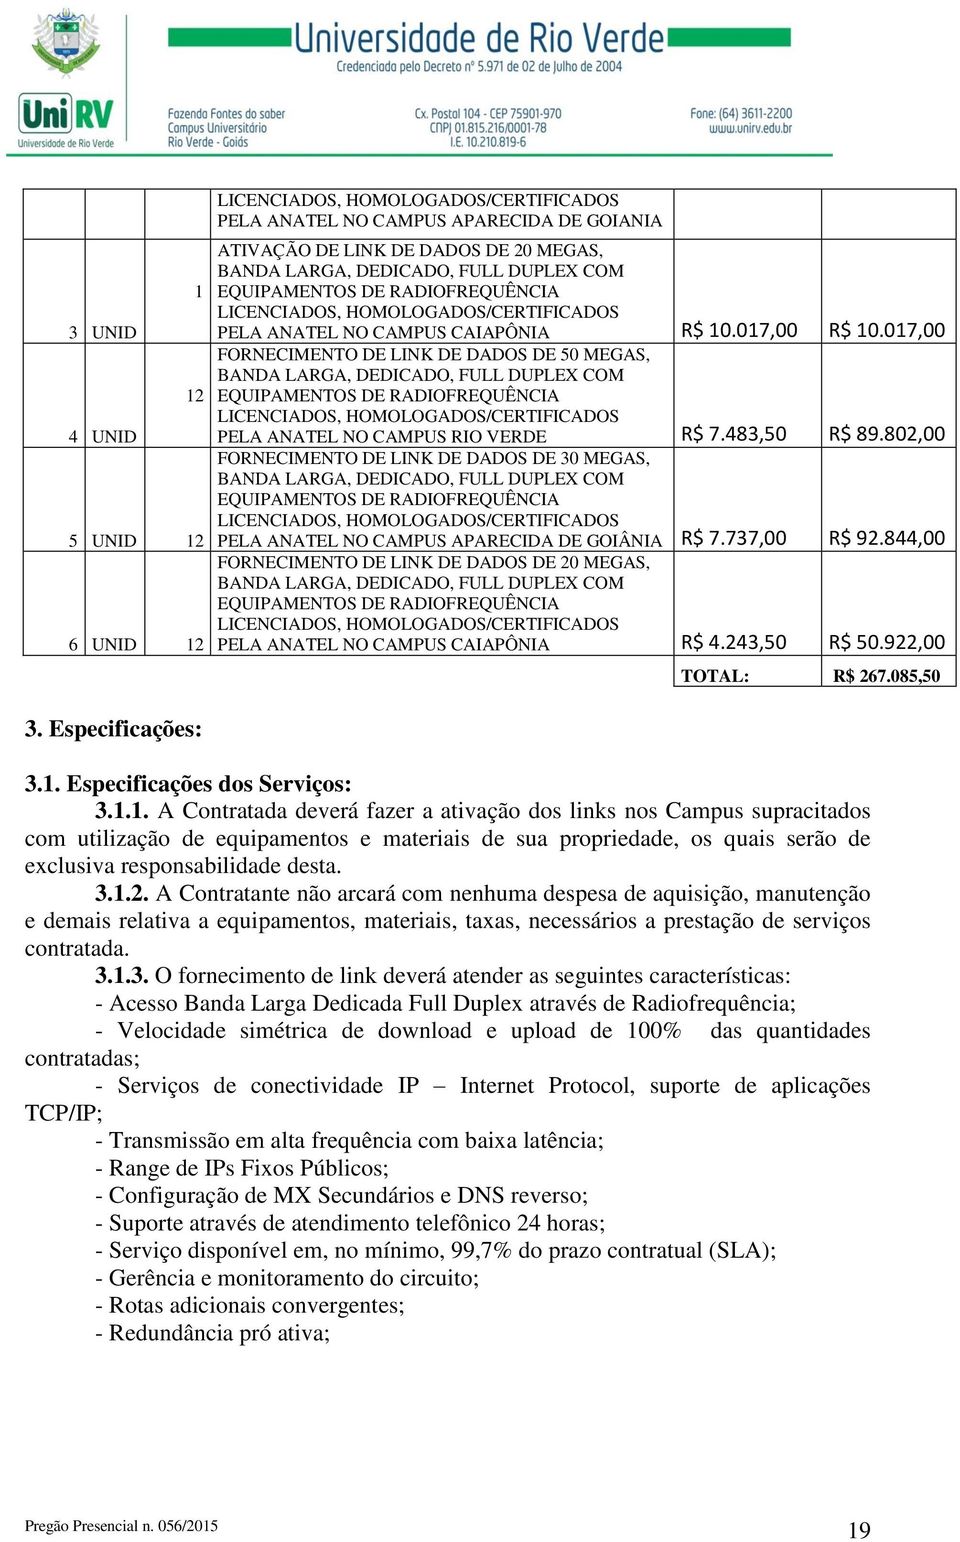 017,00 FORNECIMENTO DE LINK DE DADOS DE 50 MEGAS, BANDA LARGA, DEDICADO, FULL DUPLEX COM EQUIPAMENTOS DE RADIOFREQUÊNCIA LICENCIADOS, HOMOLOGADOS/CERTIFICADOS PELA ANATEL NO CAMPUS RIO VERDE R$ 7.